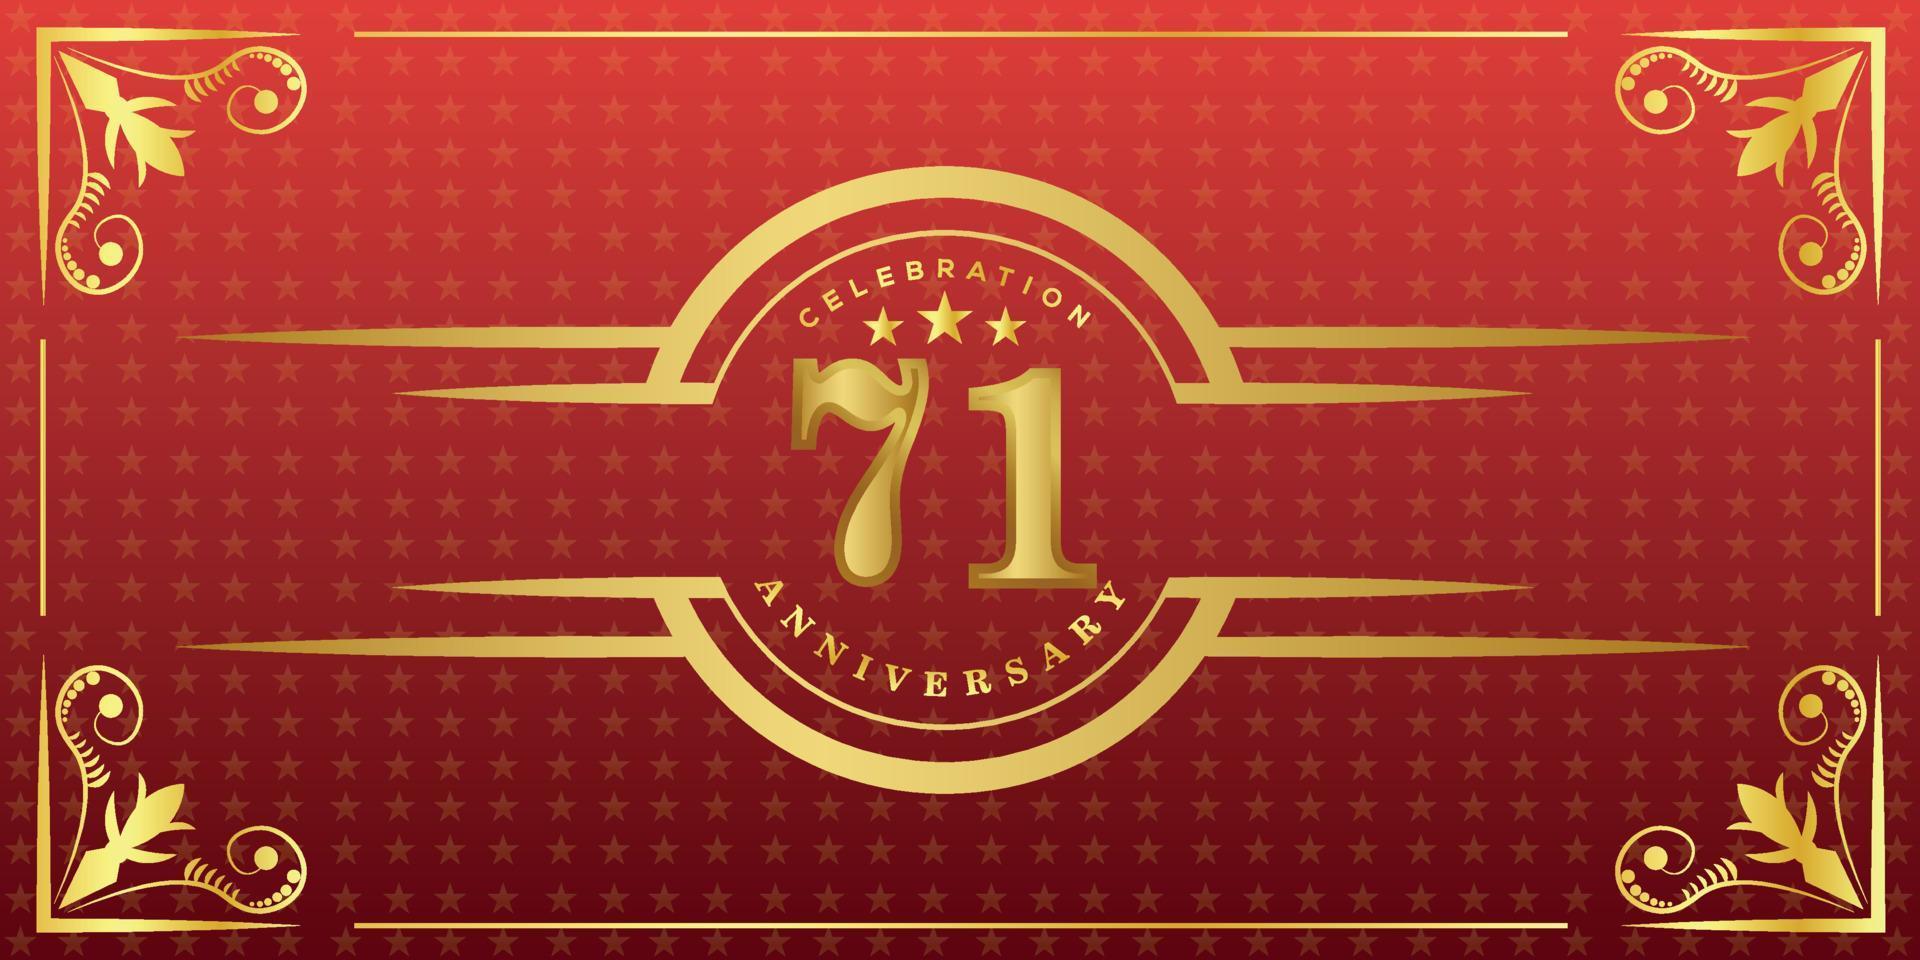 71ste verjaardag logo met gouden ring, confetti en goud grens geïsoleerd Aan elegant rood achtergrond, fonkeling, vector ontwerp voor groet kaart en uitnodiging kaart